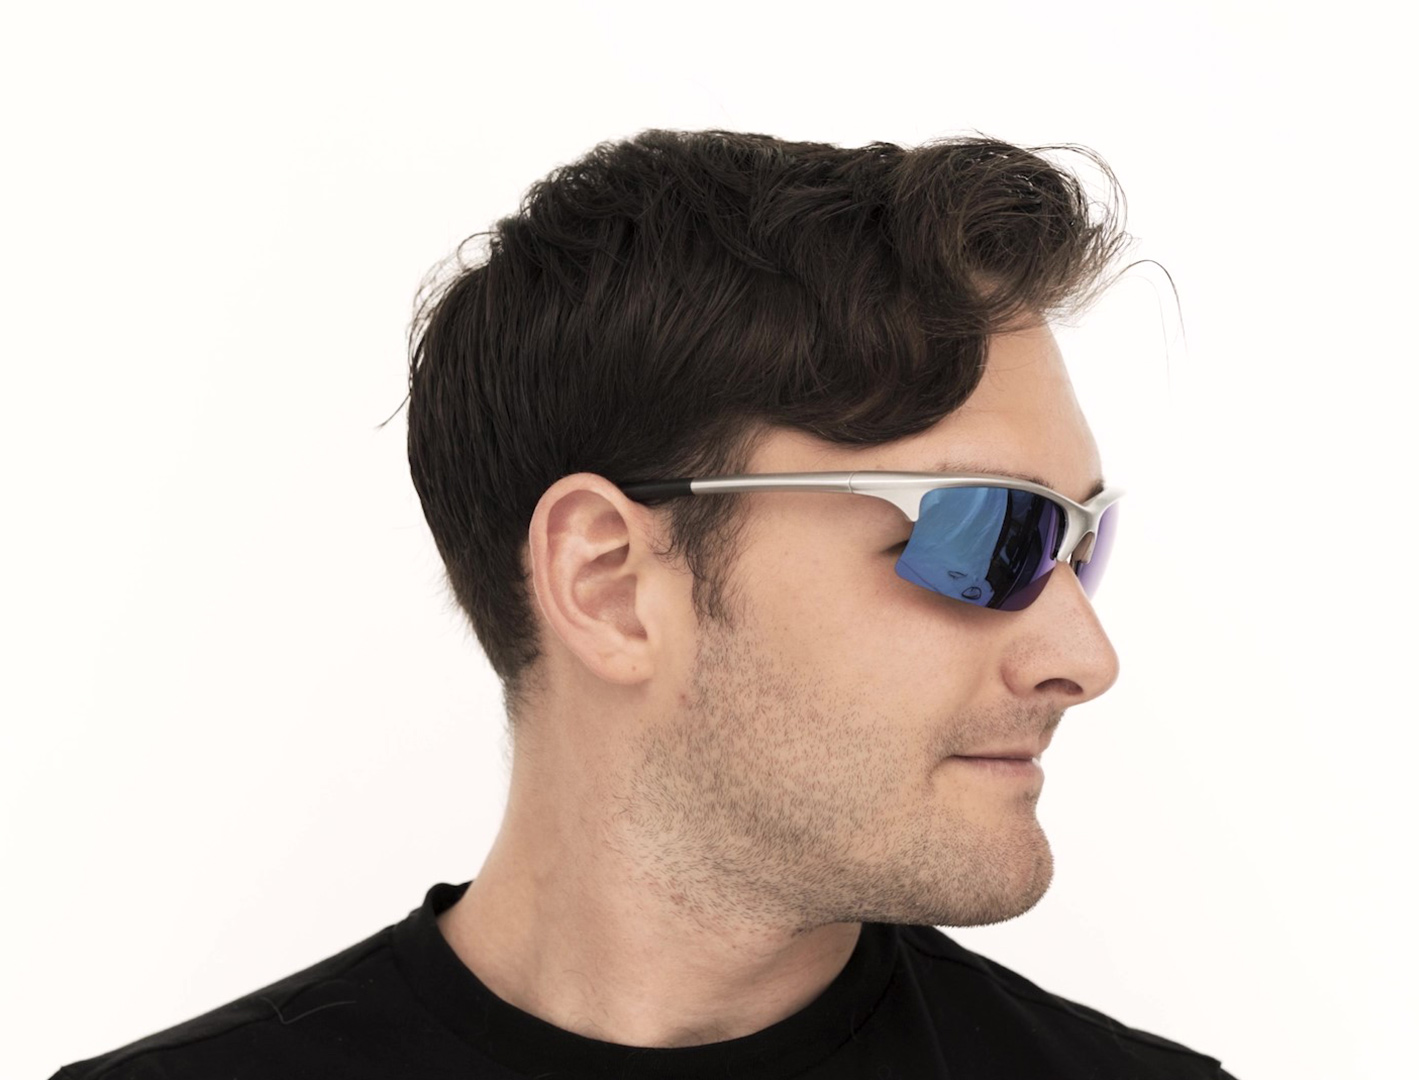 Matrix Denali Prescription Sports Glasses and Sunglasses